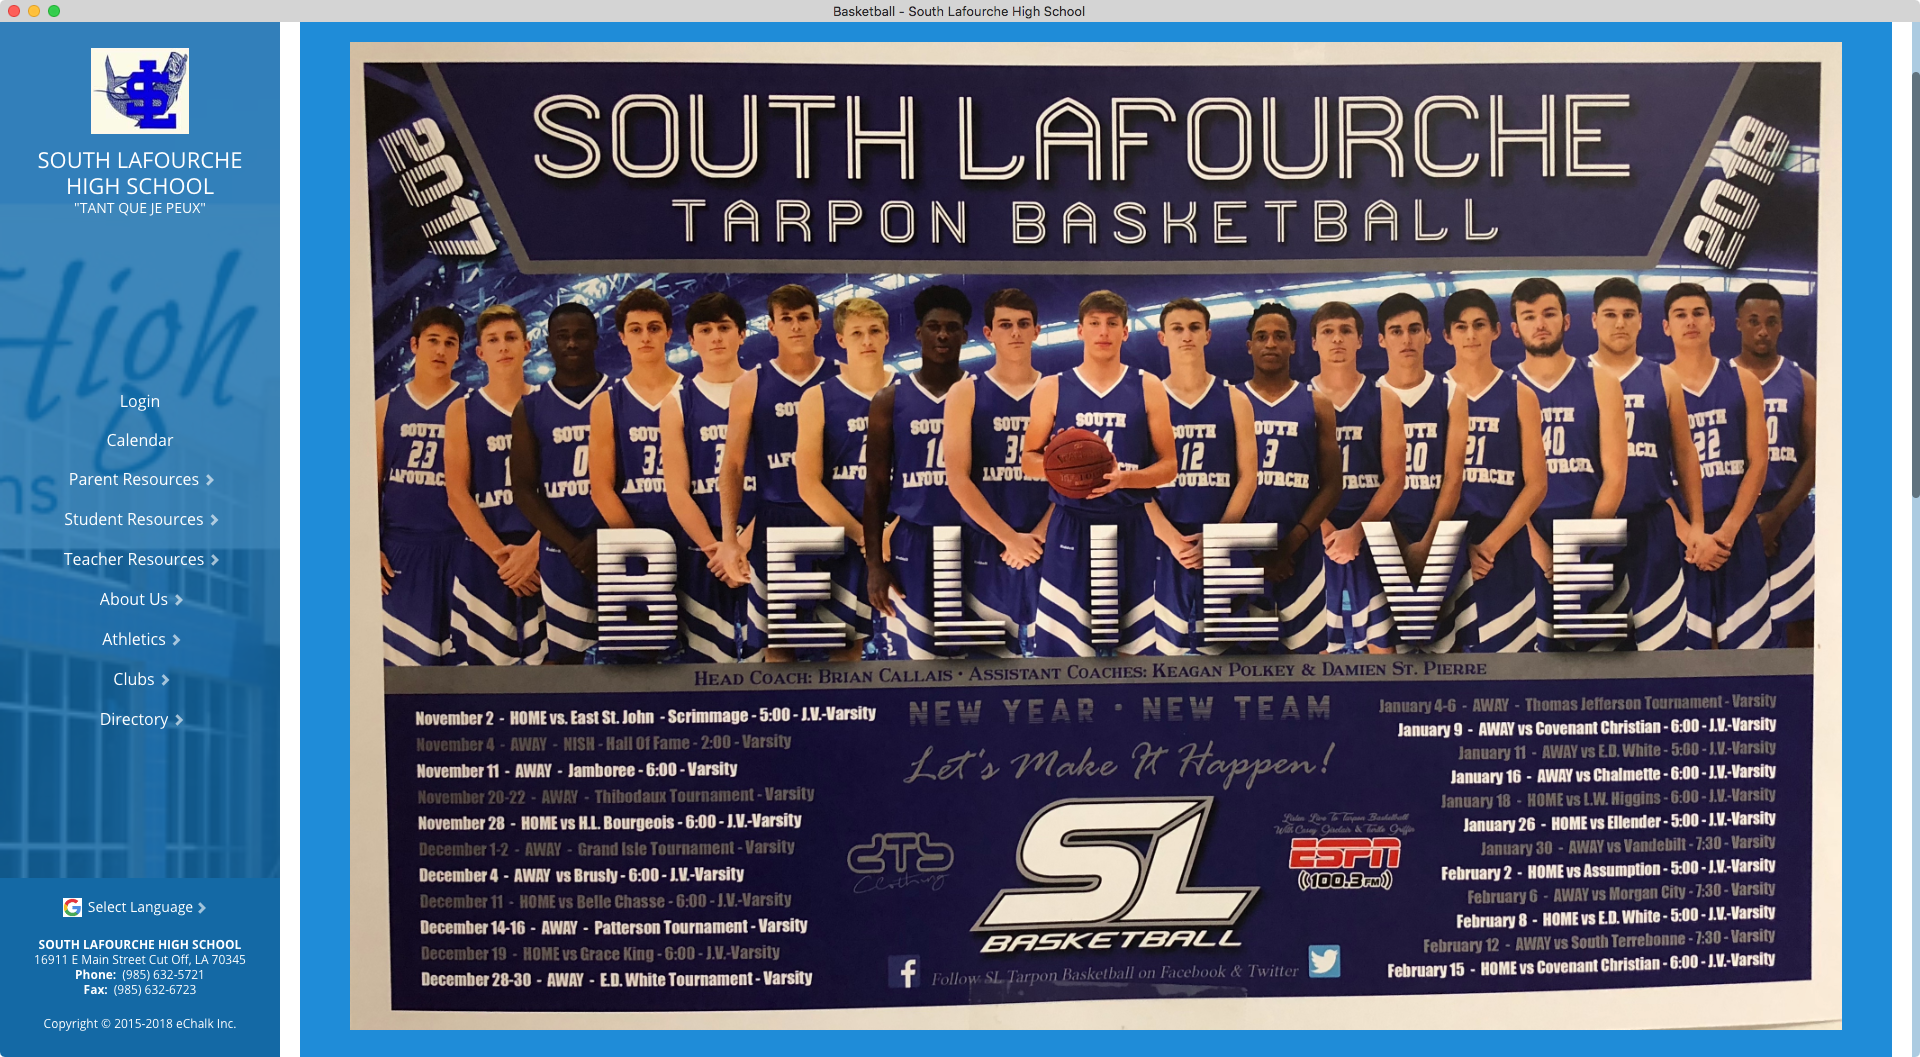 South Lafourche High School Basketball Team Webpage